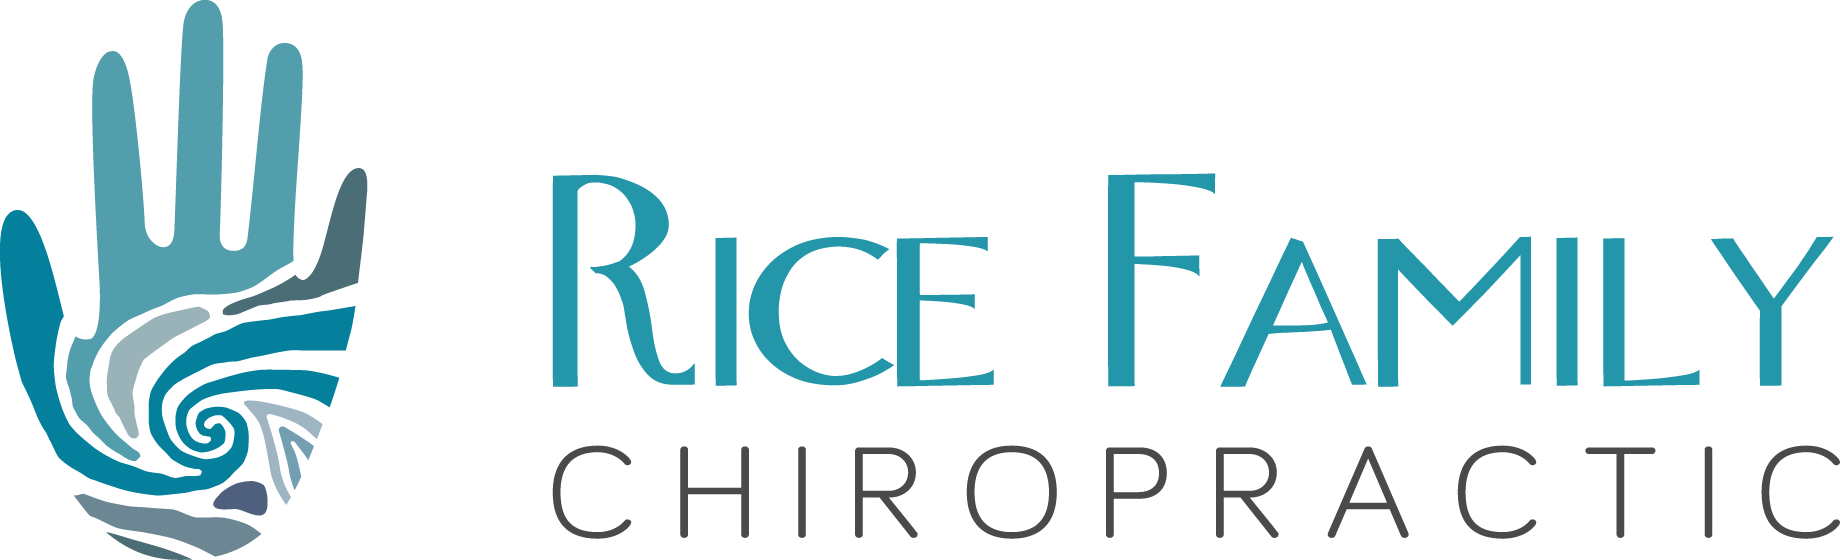 Rice Family Chiropractic